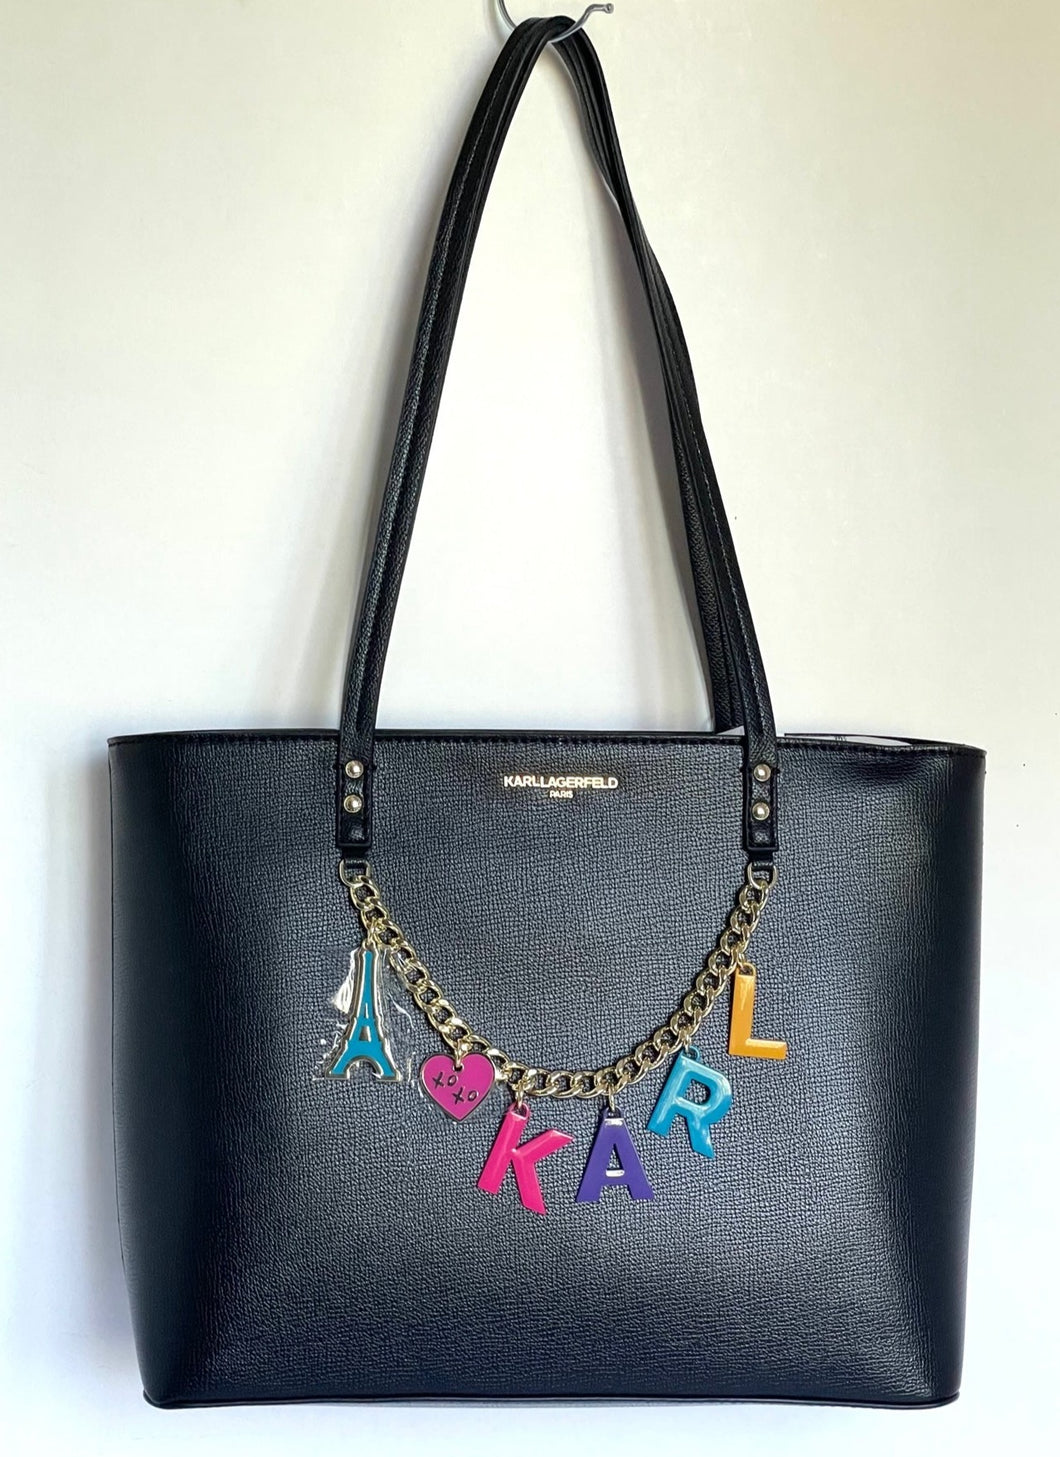 Karl Lagerfeld Tote Maybelle Womens Black Medium Shoulder Bag Charms Vegan Leather